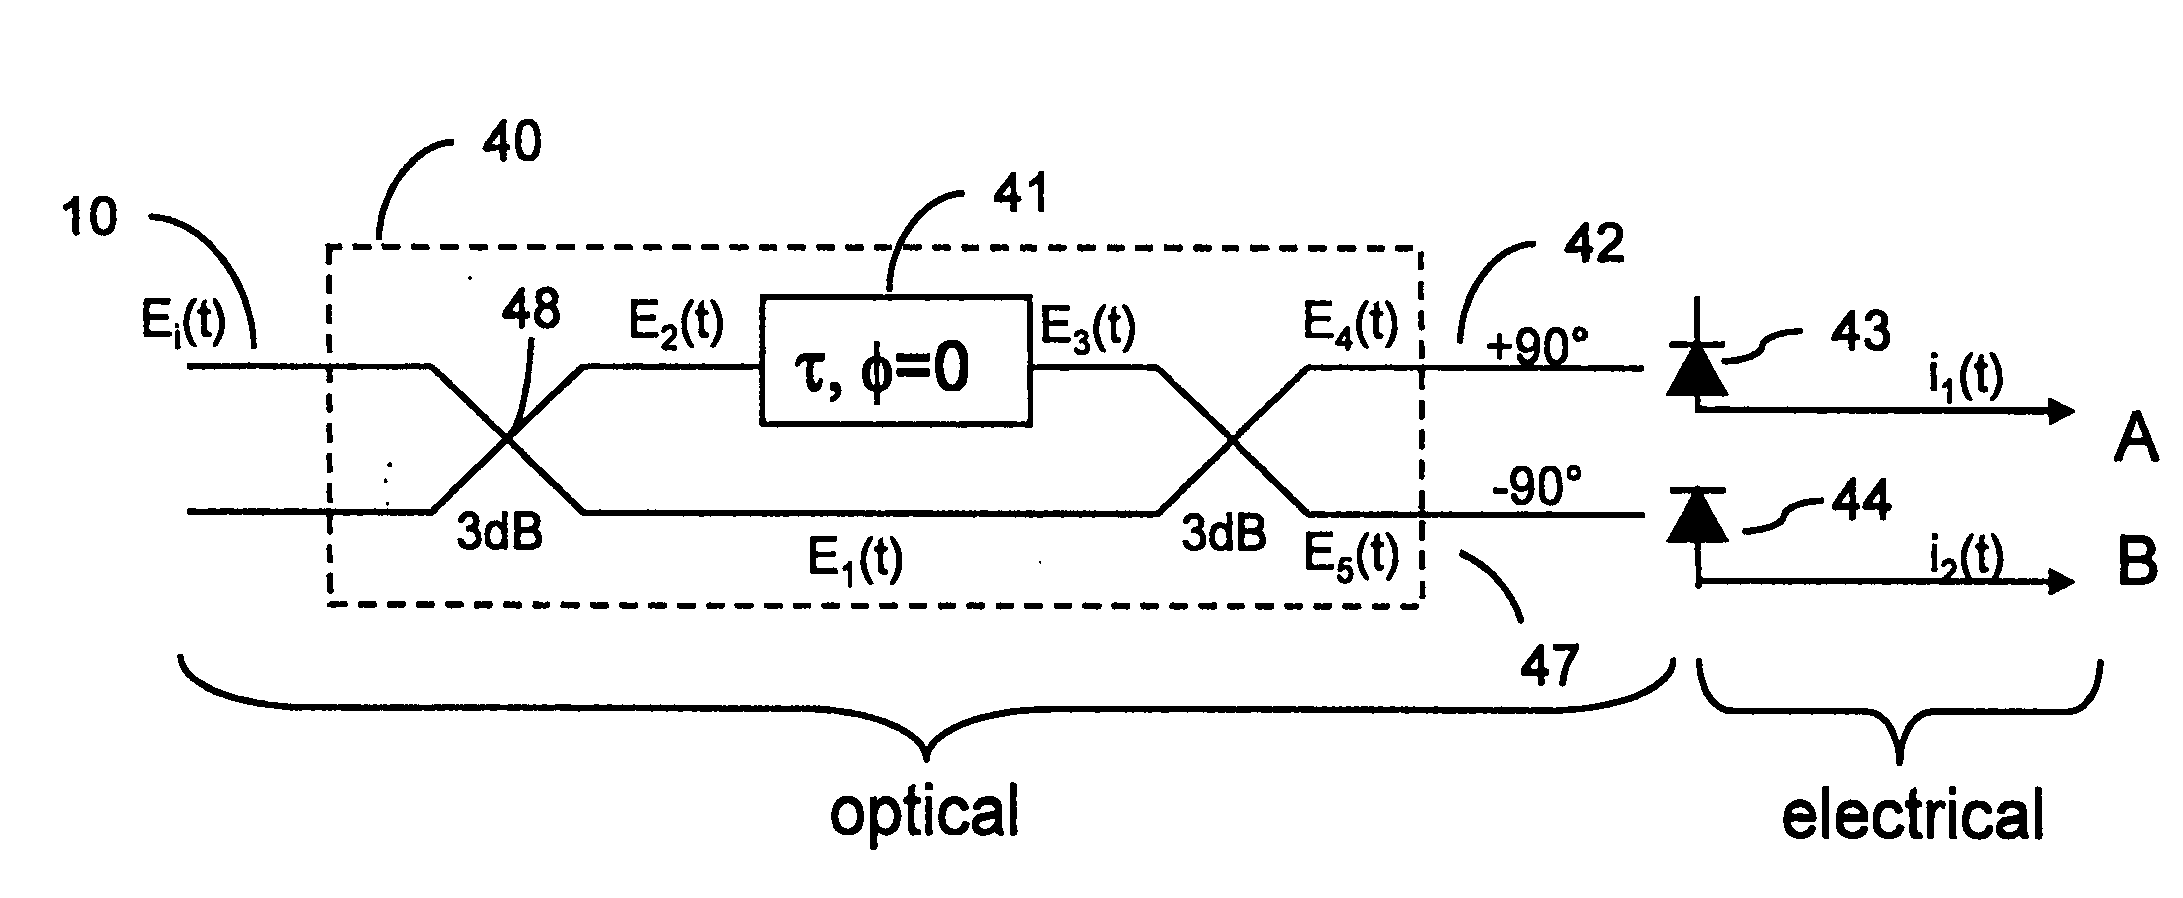 Multi-detector detection of optical signals